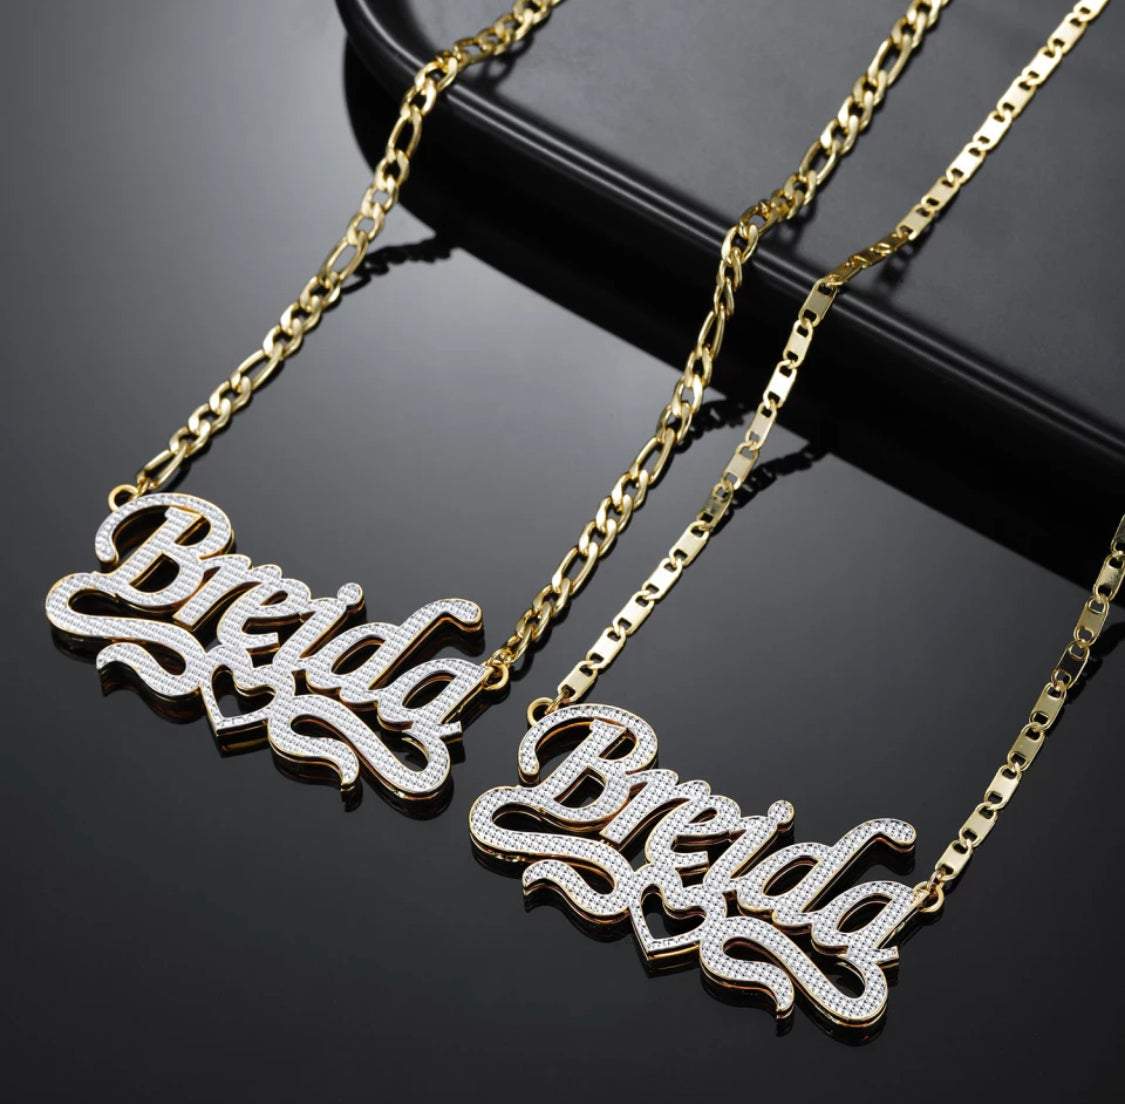 The Breida Necklace